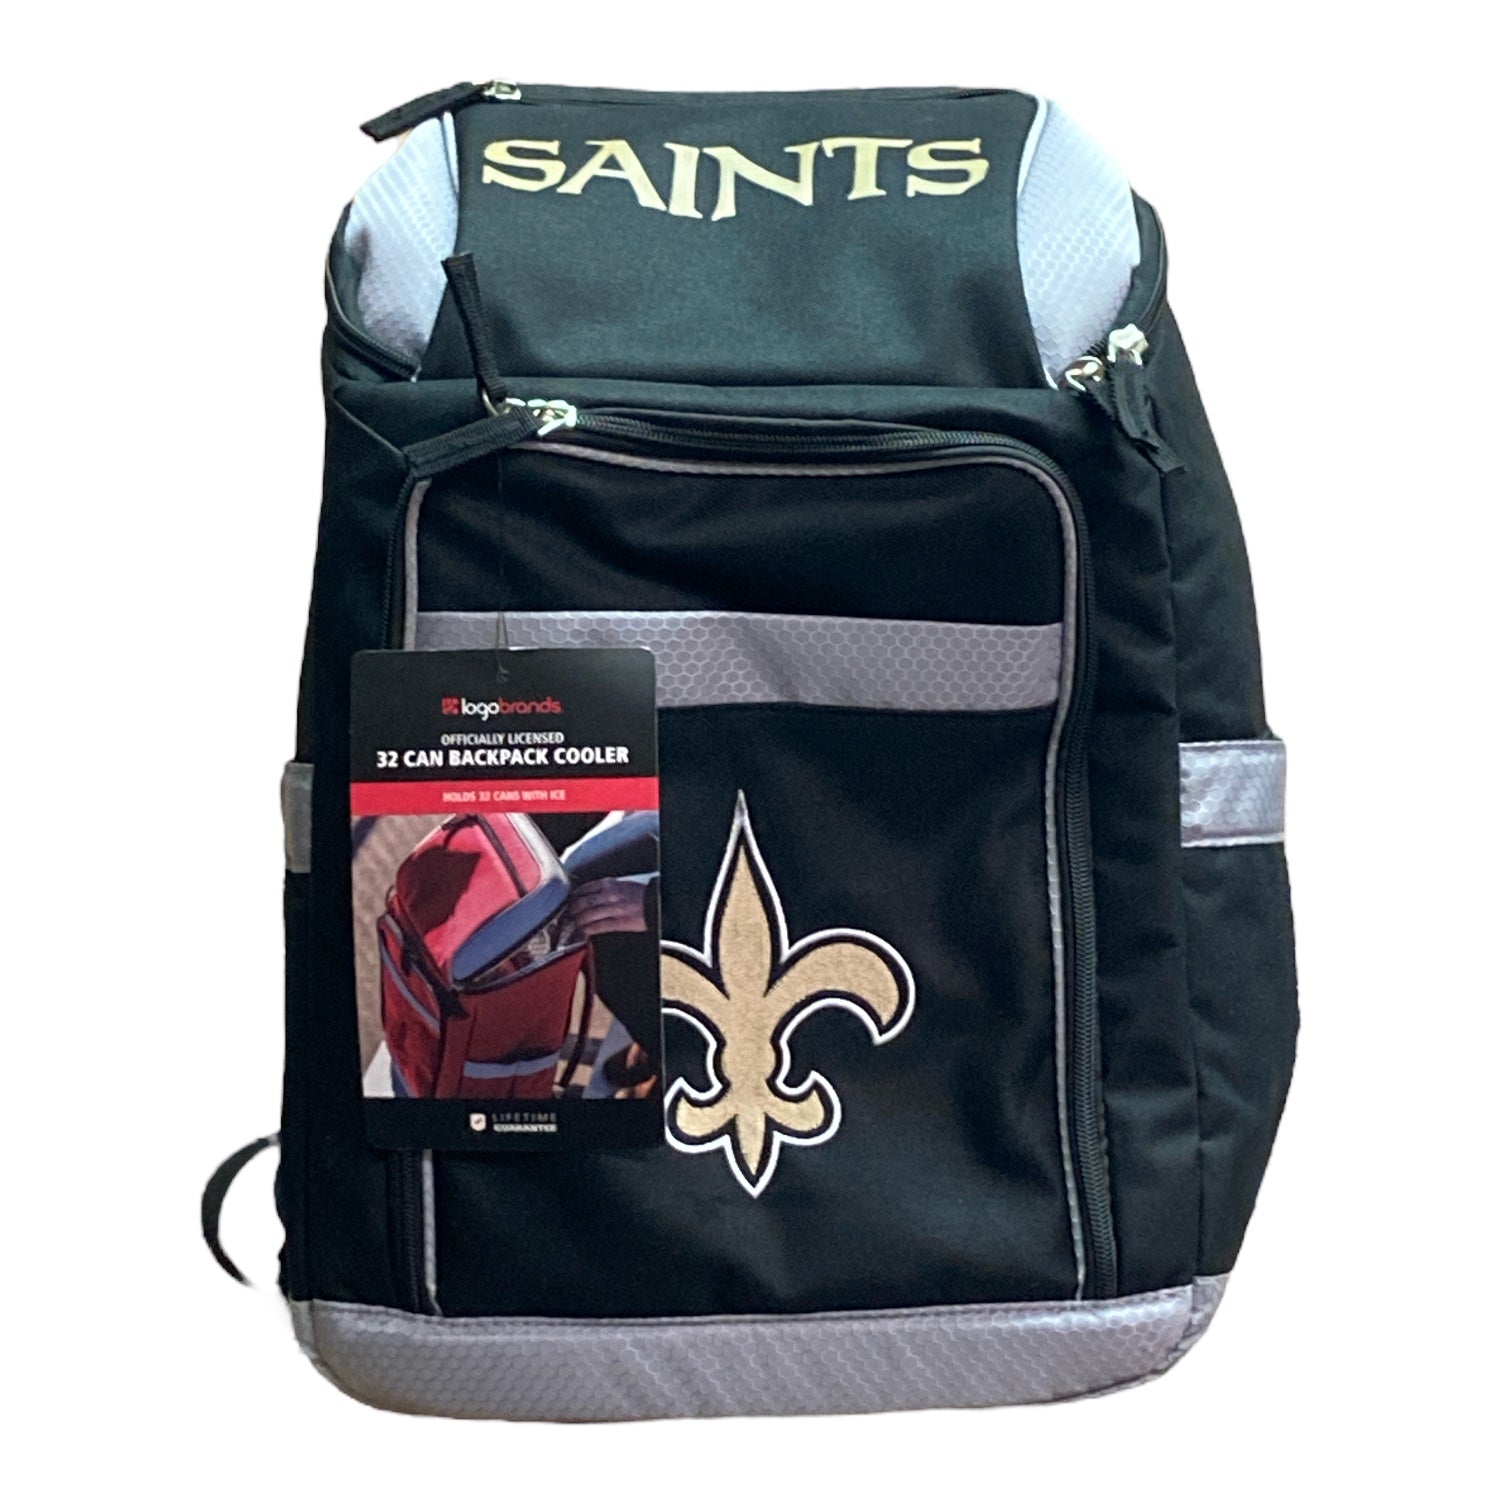 Logo Brands Officially Licensed NFL 32-Can Backpack Cooler (New Orleans Saints)